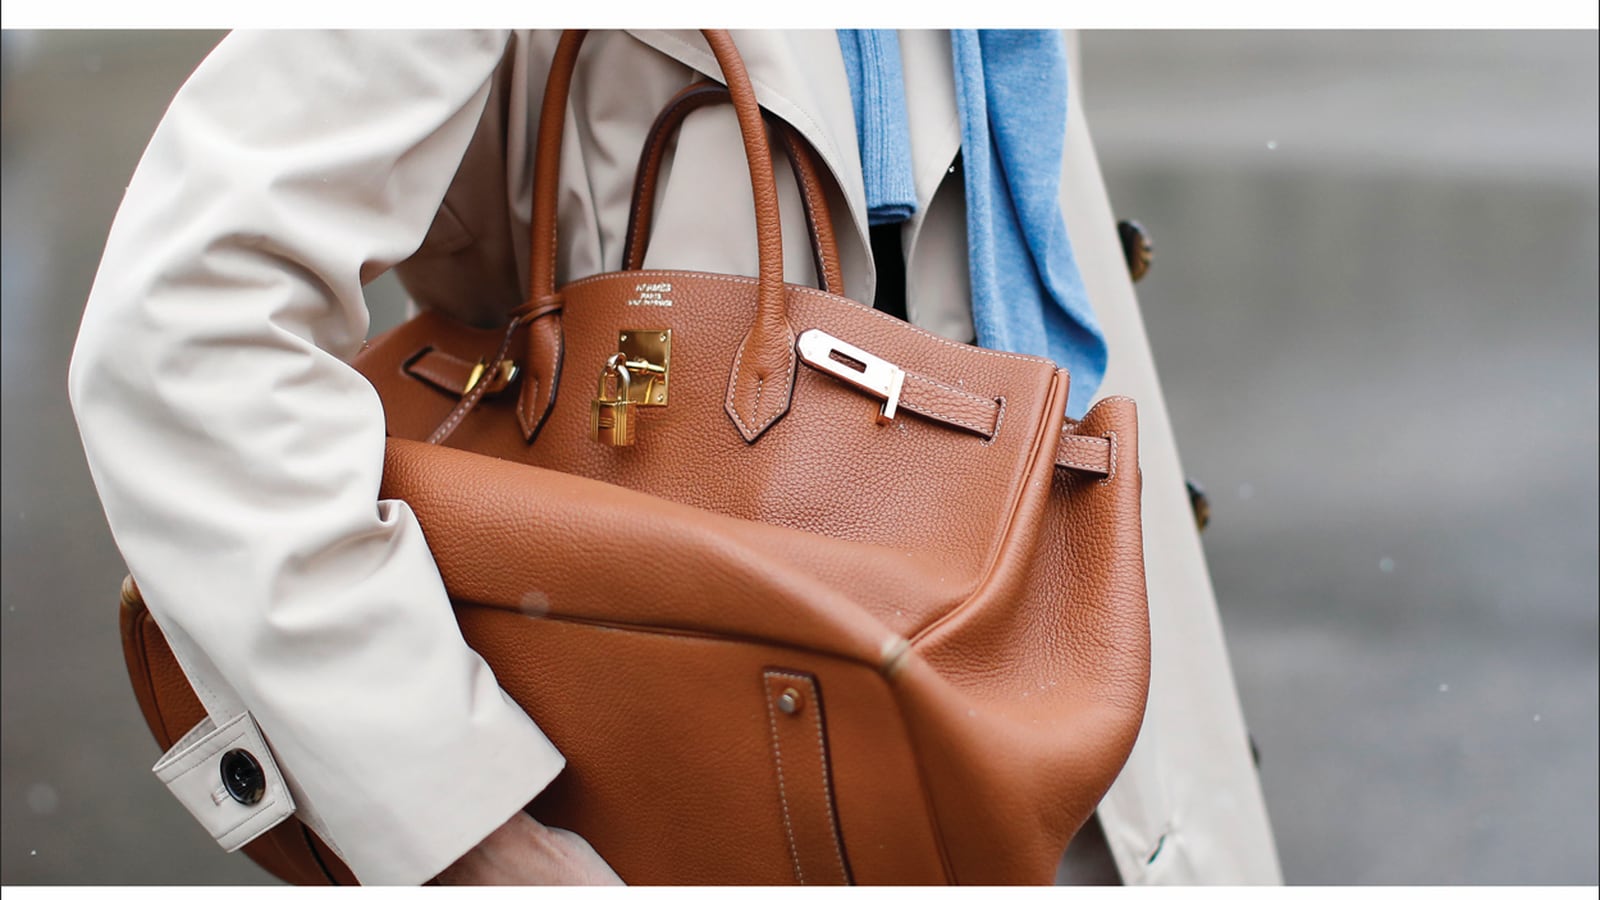 Instant download Vuitton, Chanel and Birkin bag. Designer purse